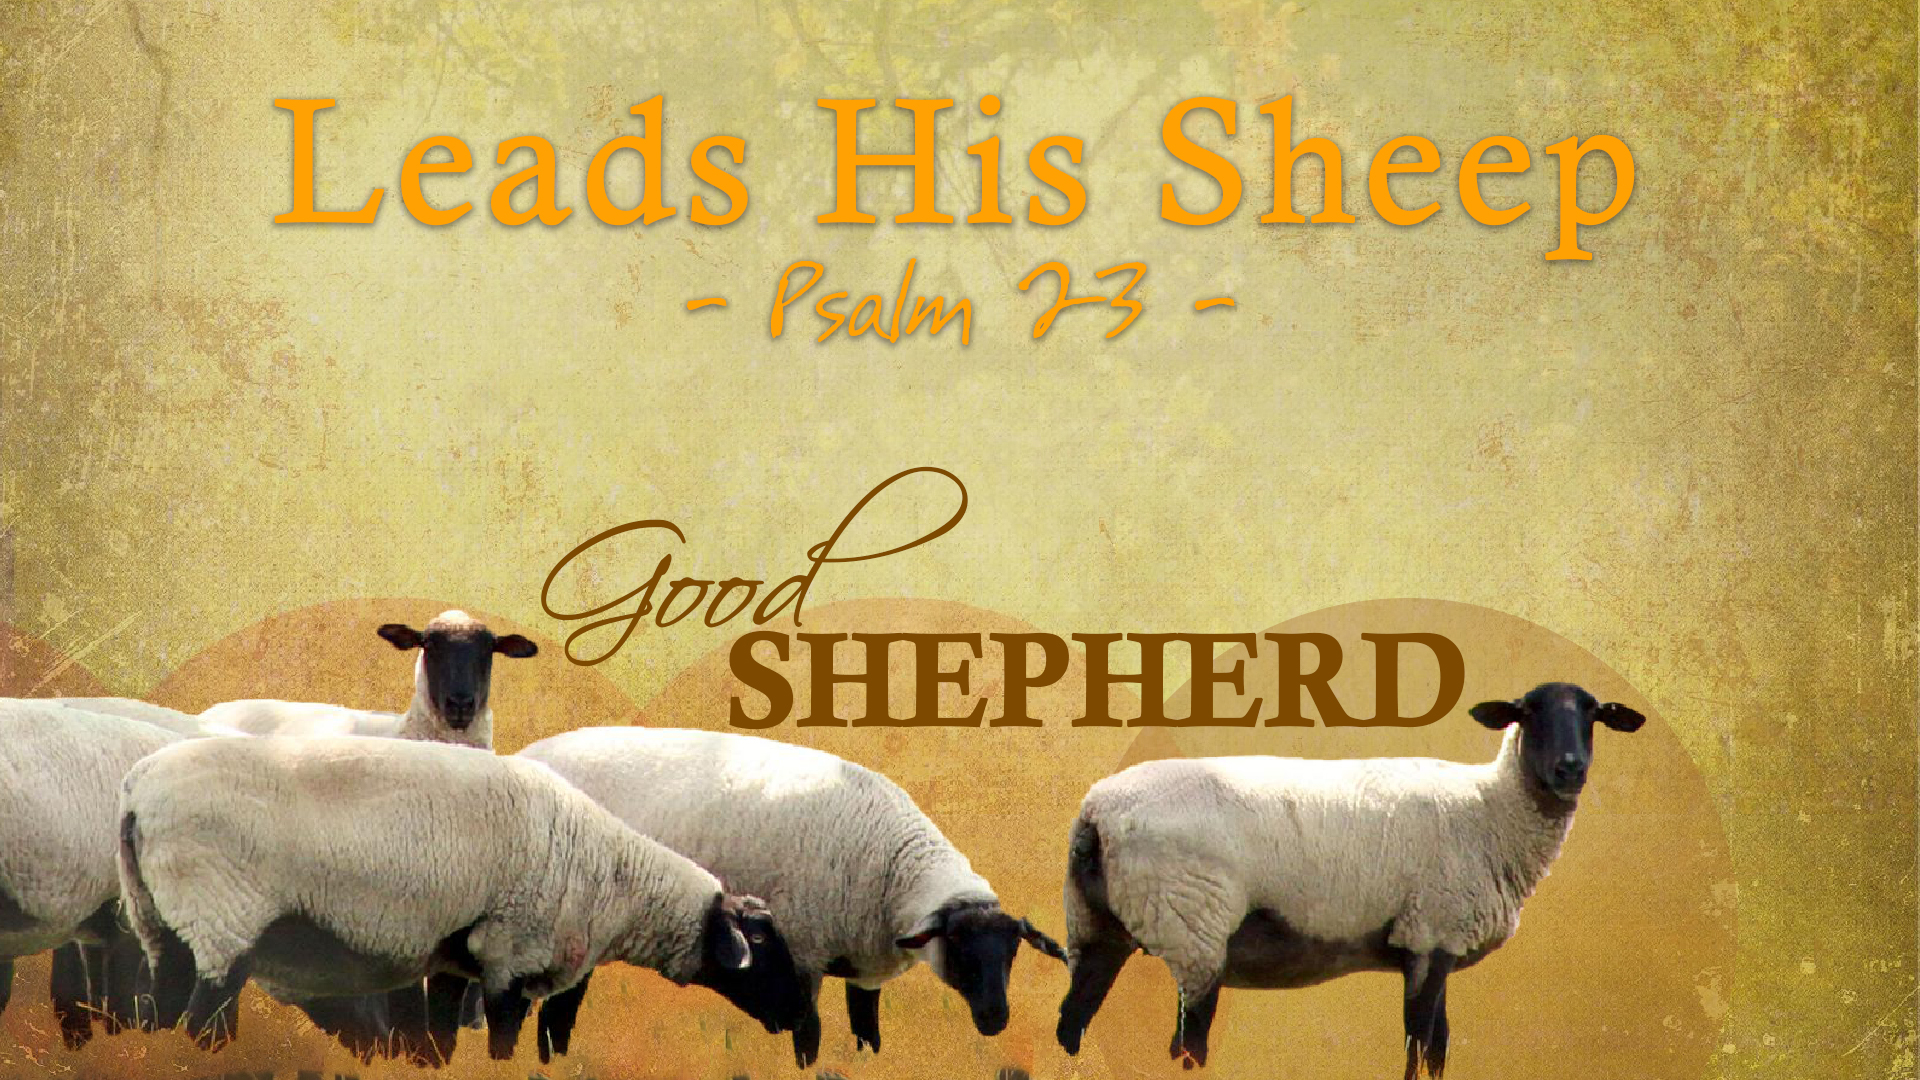  Good Shepherd, part 1: Leads His Sheep  Image